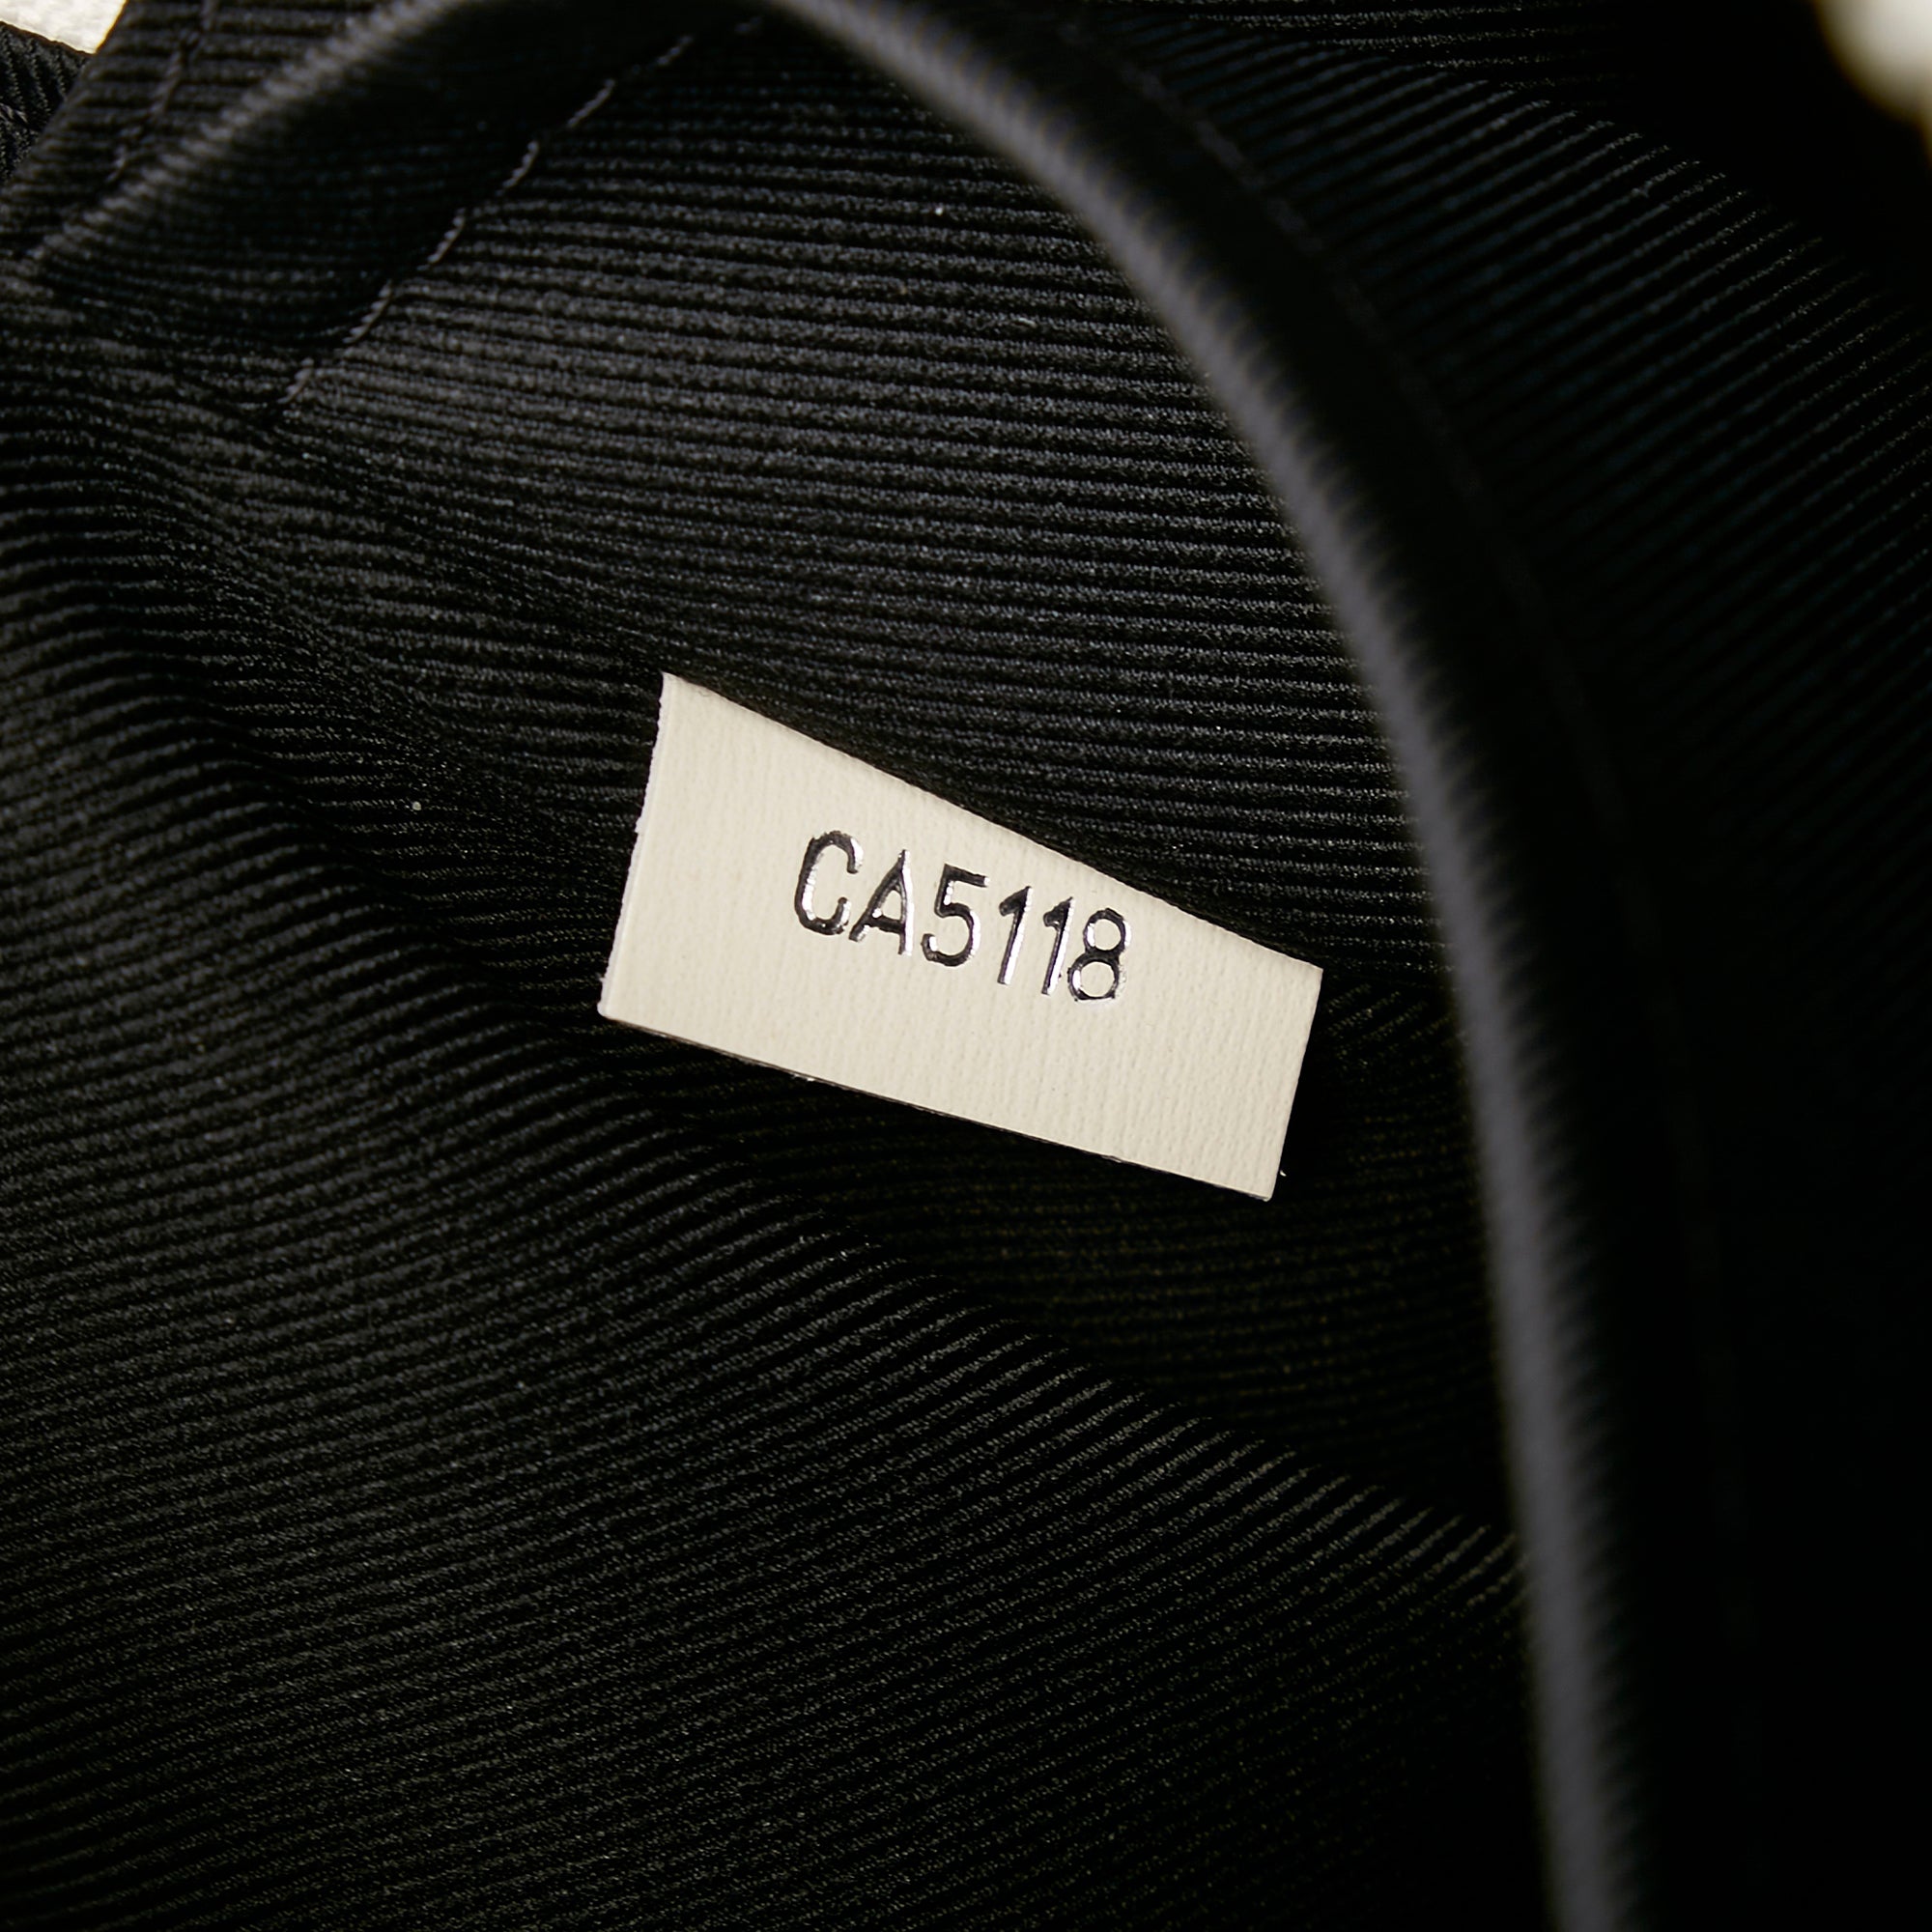 Louis Vuitton Taurillon Utility Side Bag